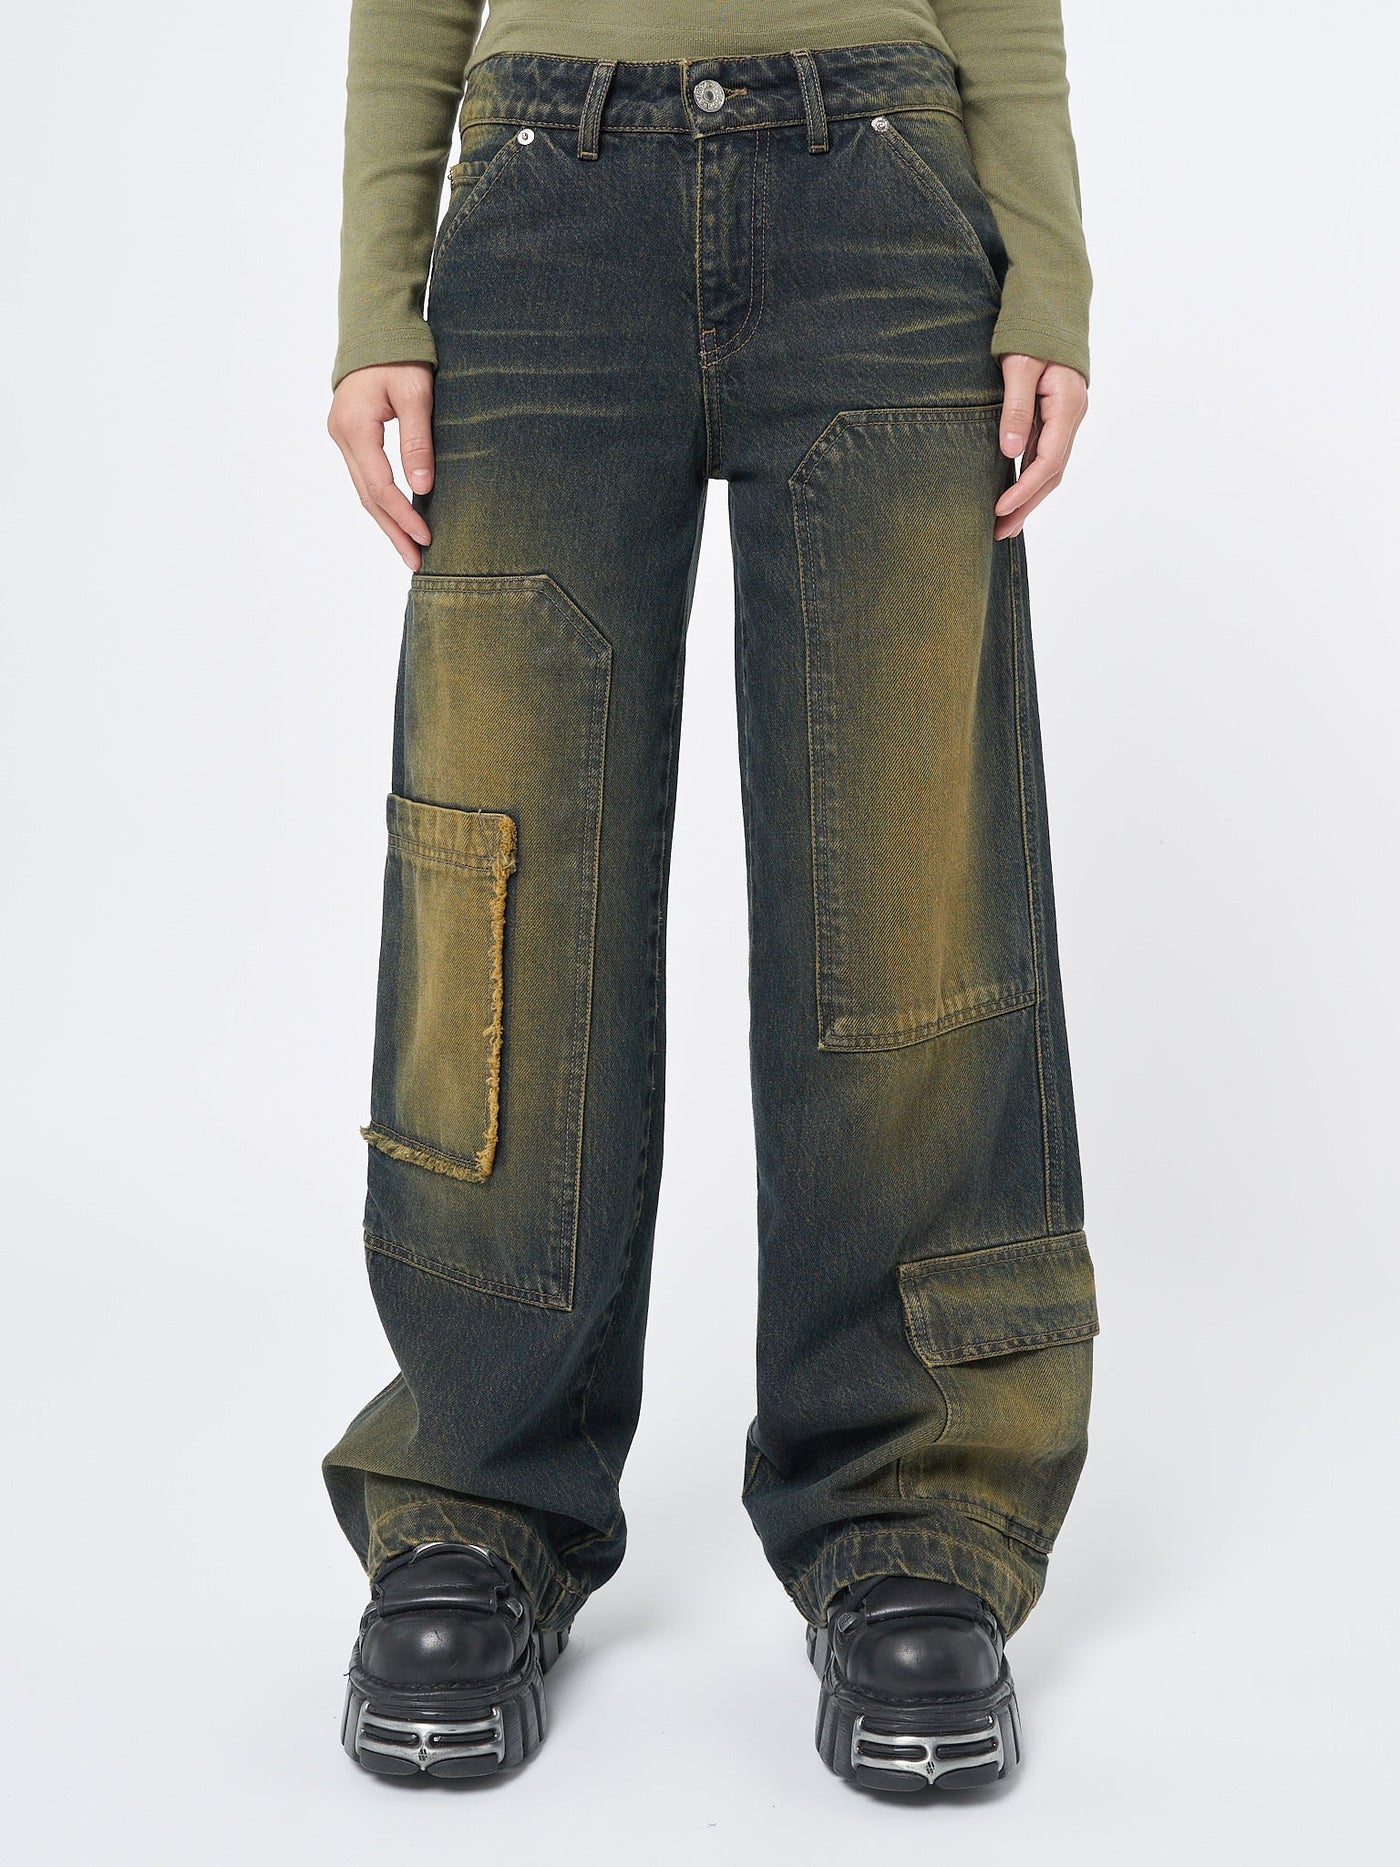 Multi pocket cargo jeans in honey green overdye wash